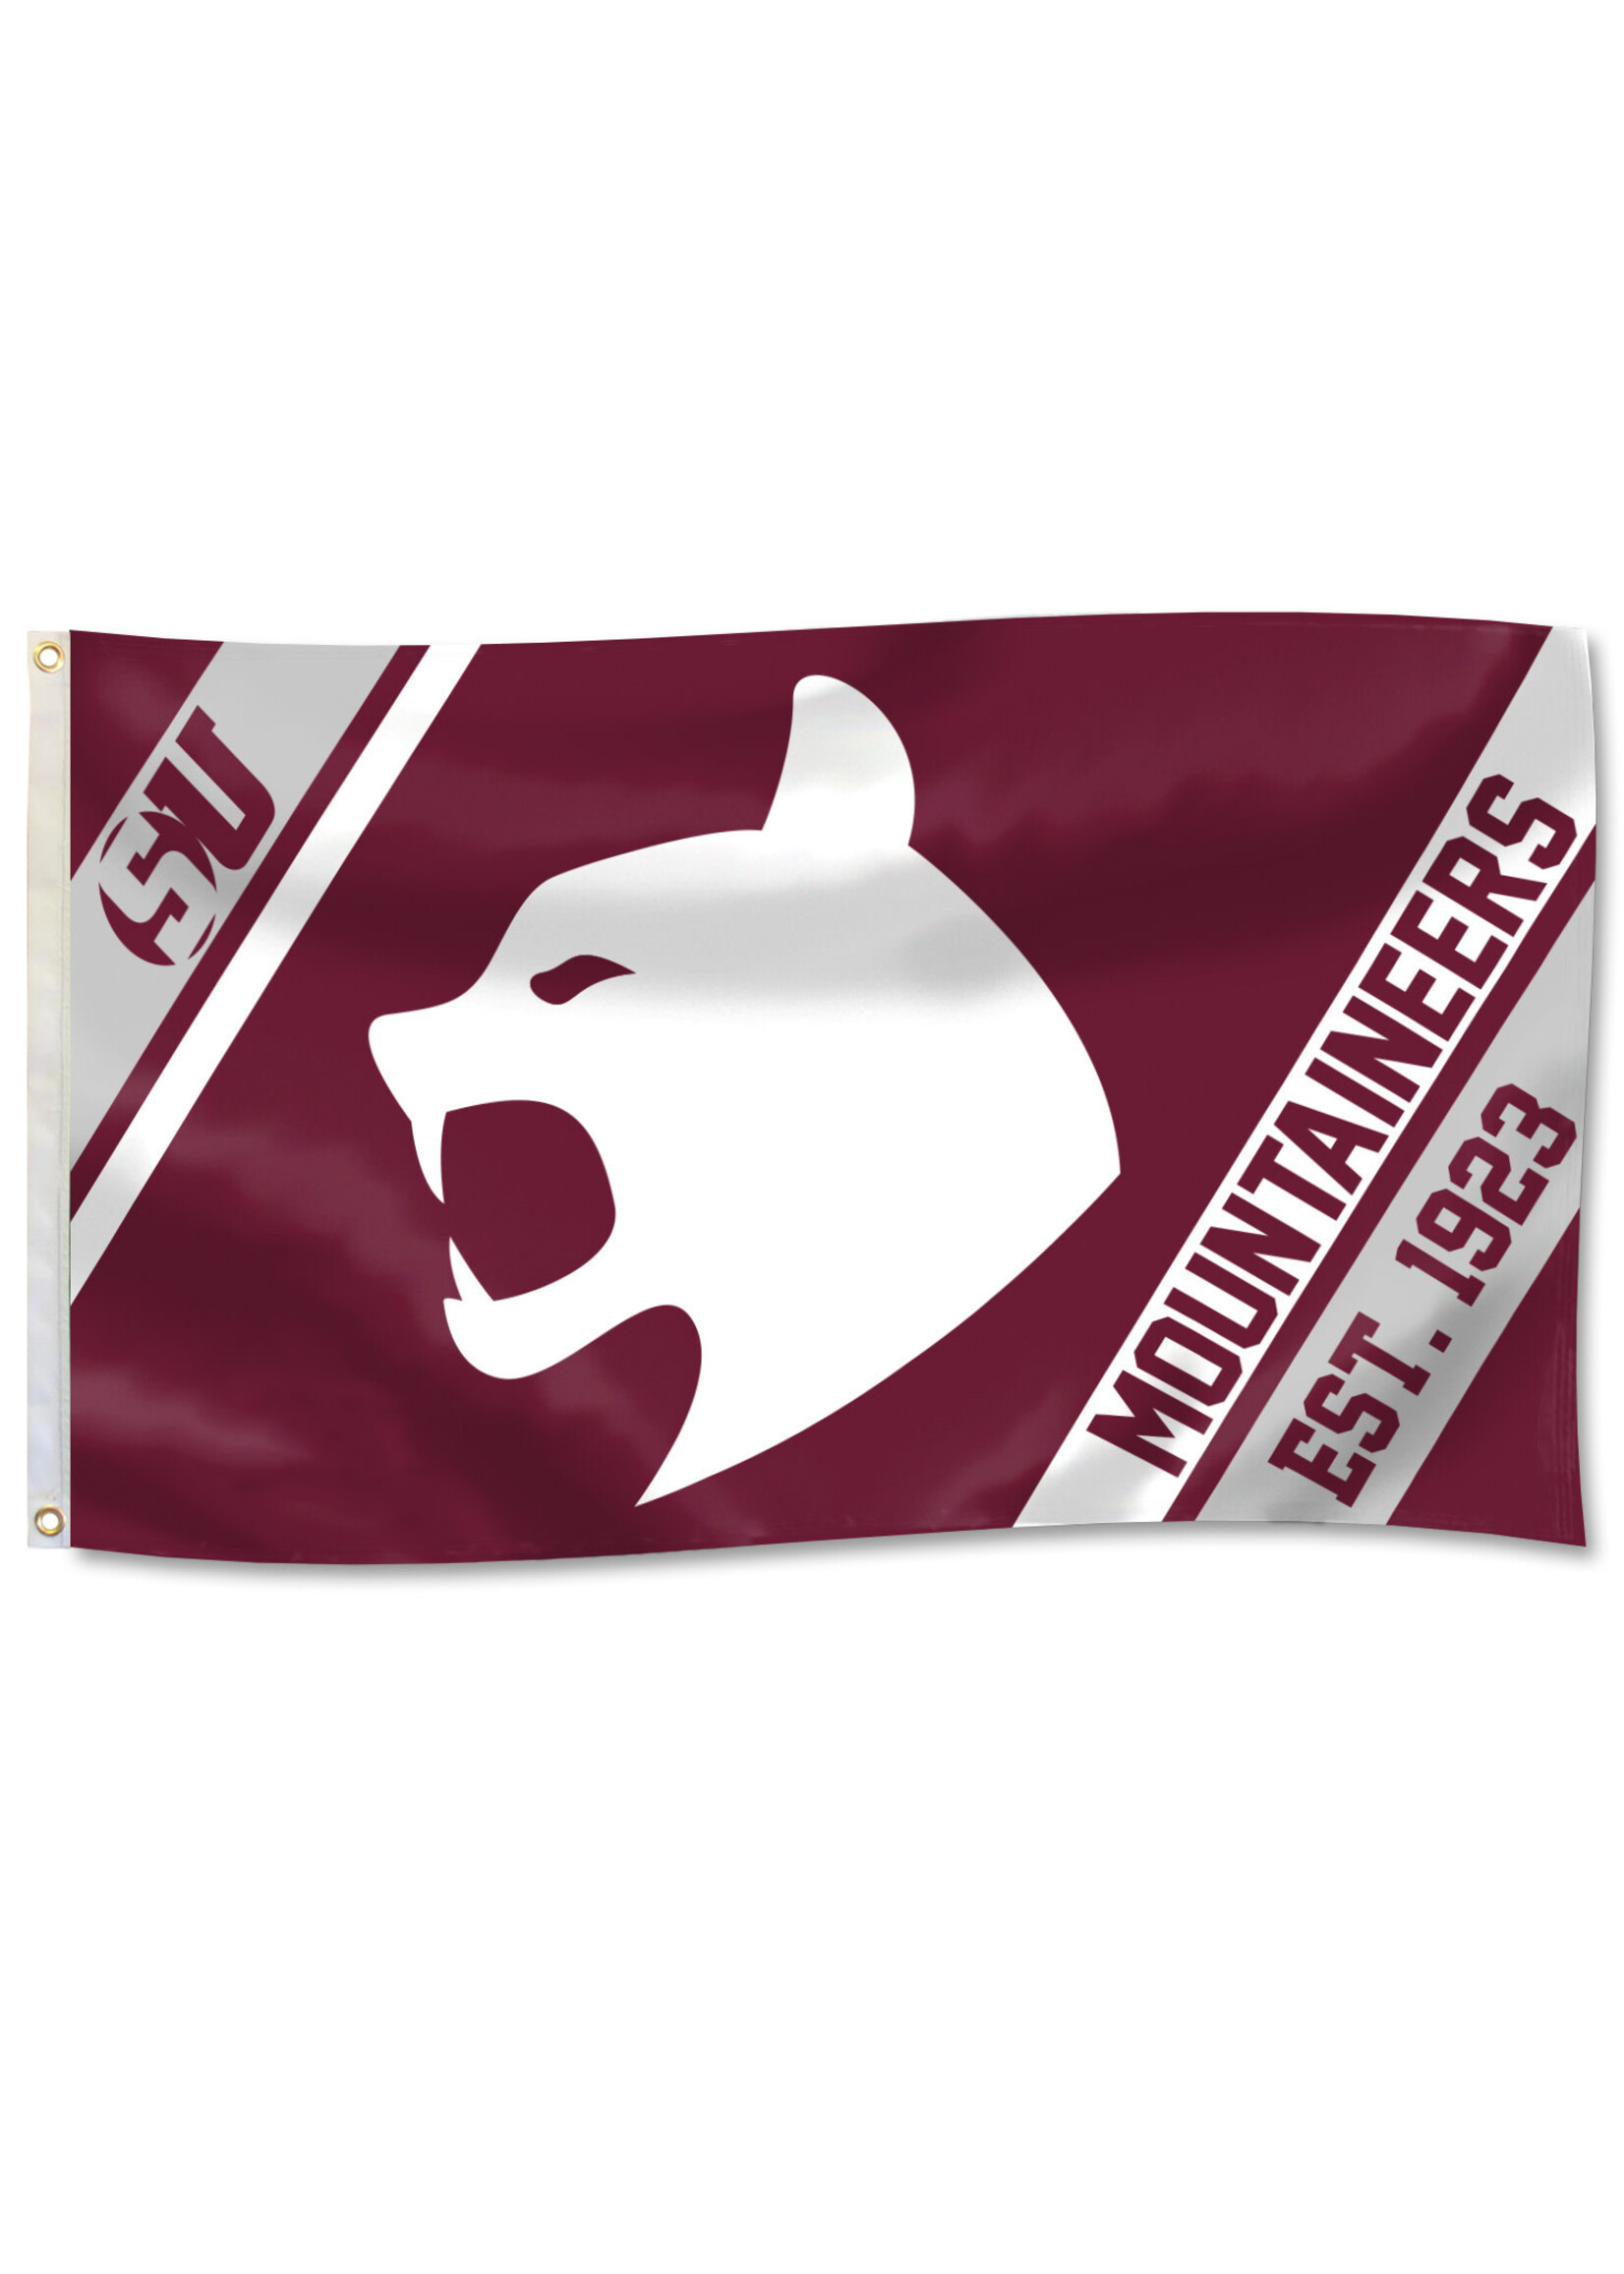 University Blanket and Flag Schreiner Monty Flag 3x5ft